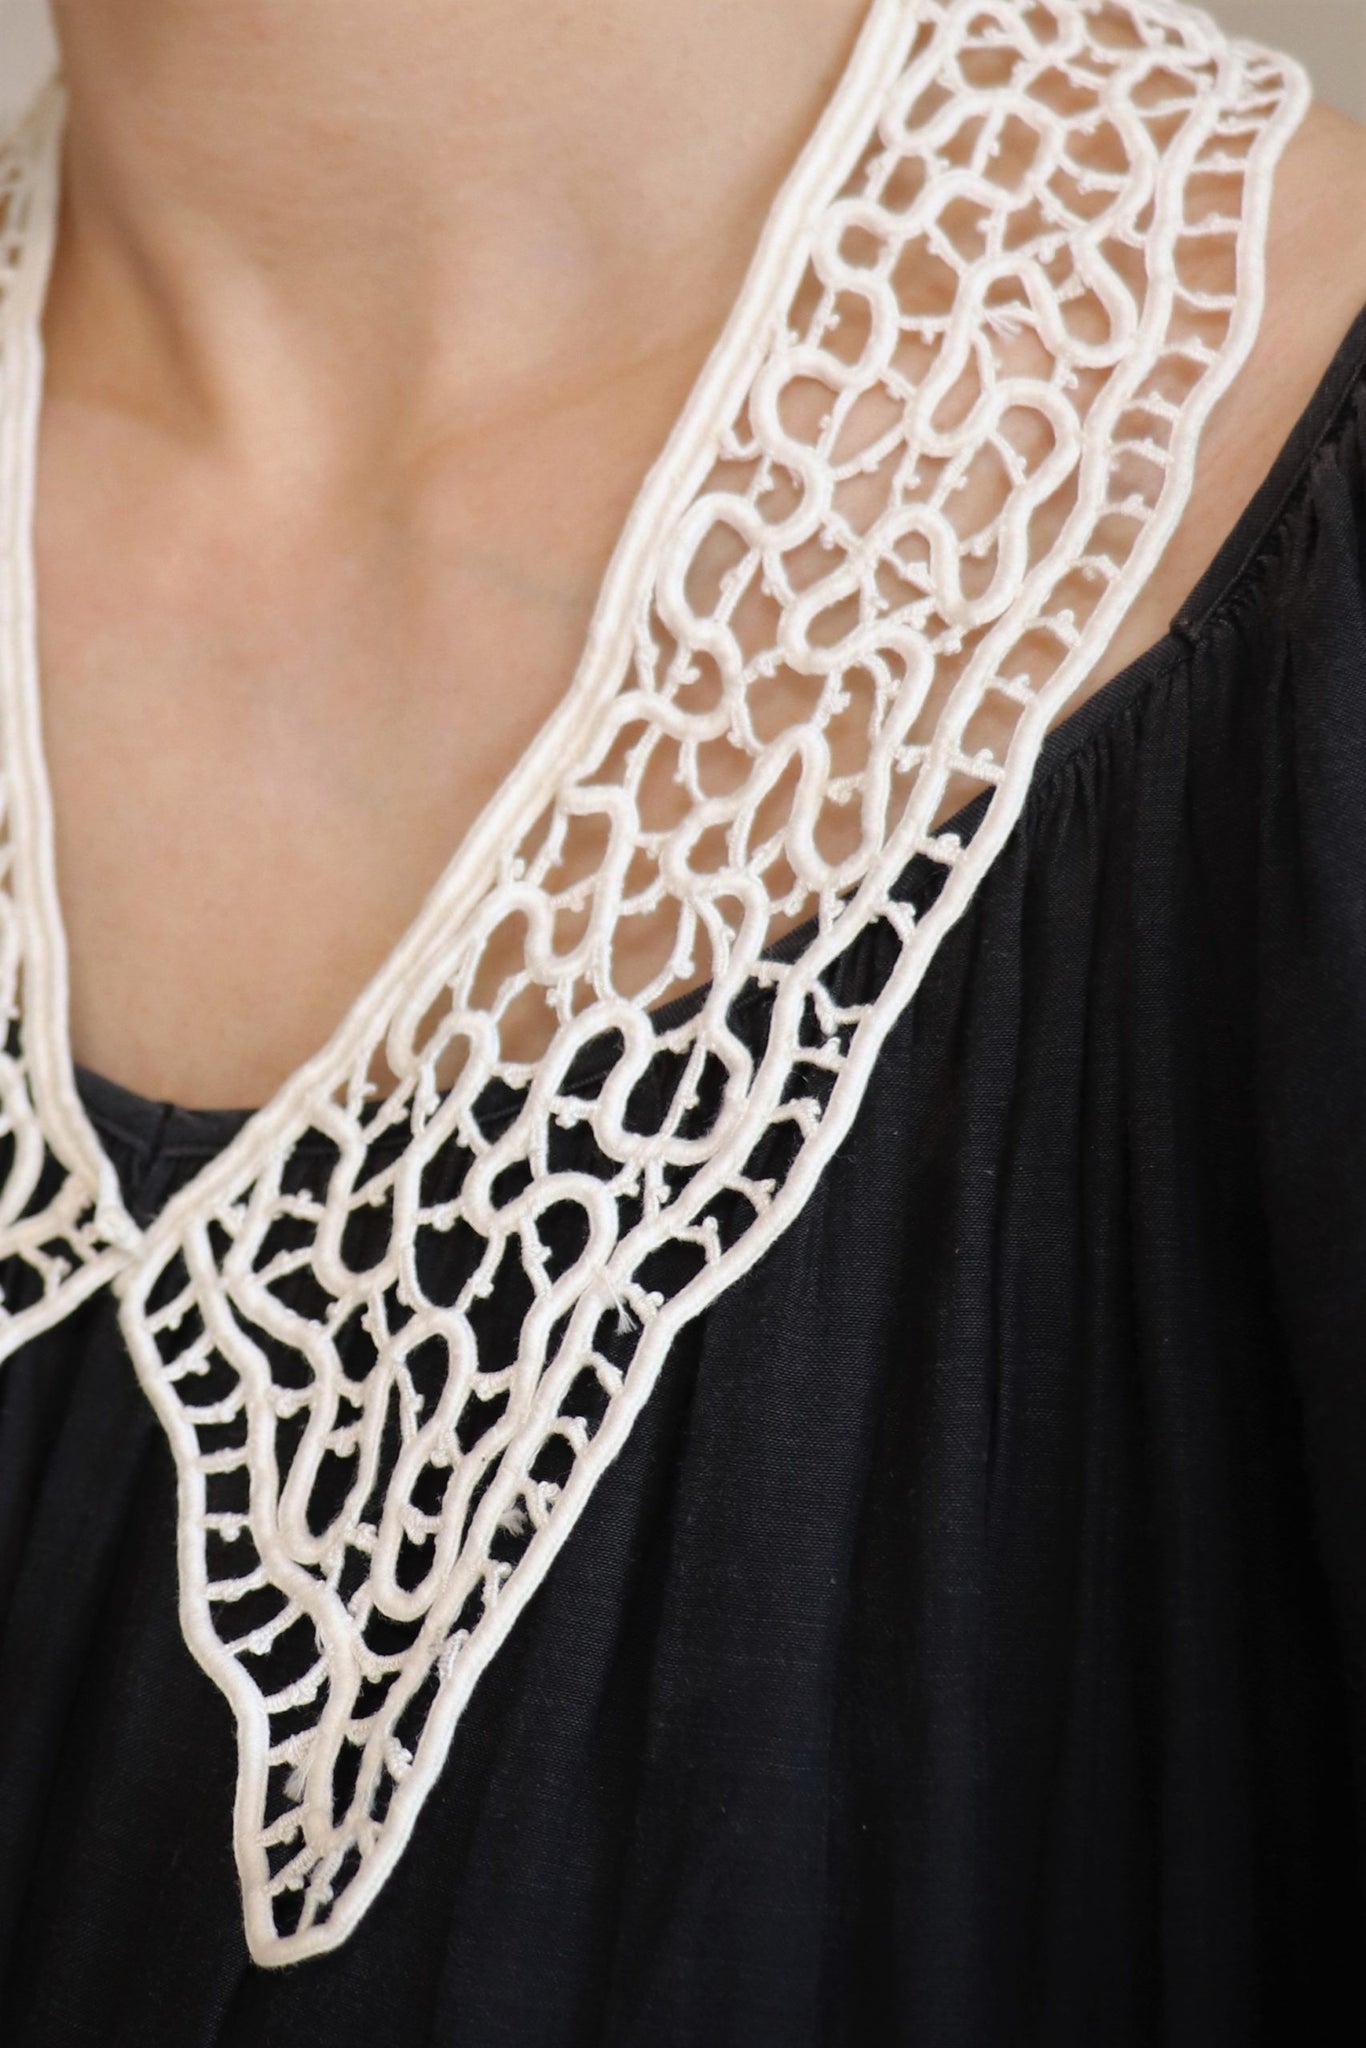 1910s White Handmade Lace Collar